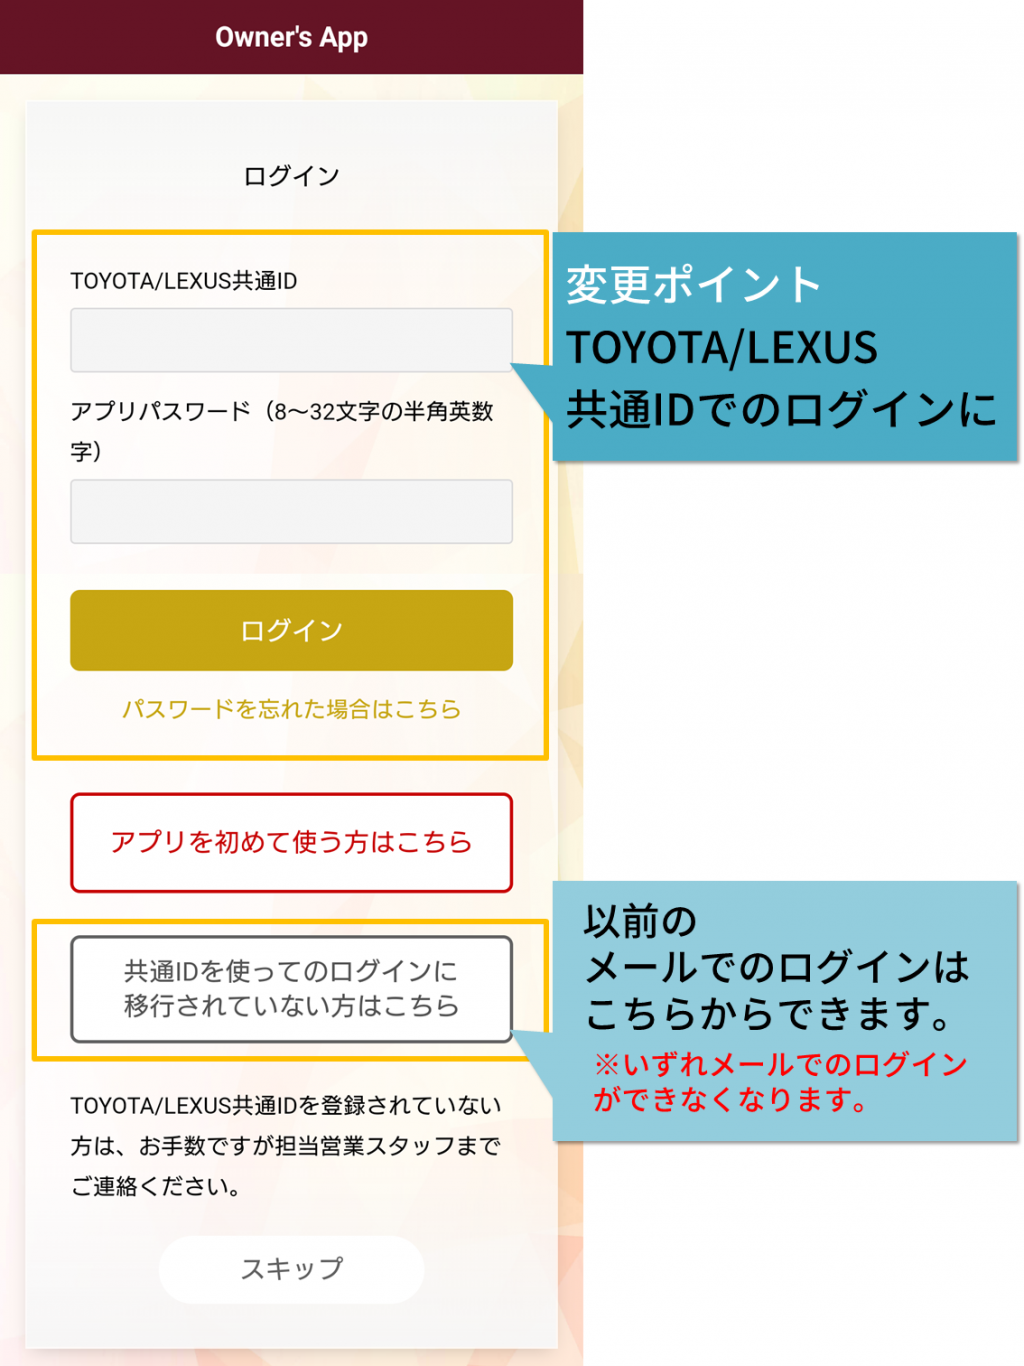 Owner S App 新機能リリース ログインページが新しくなりました トピックス 石川トヨタ自動車株式会社 公式webサイト